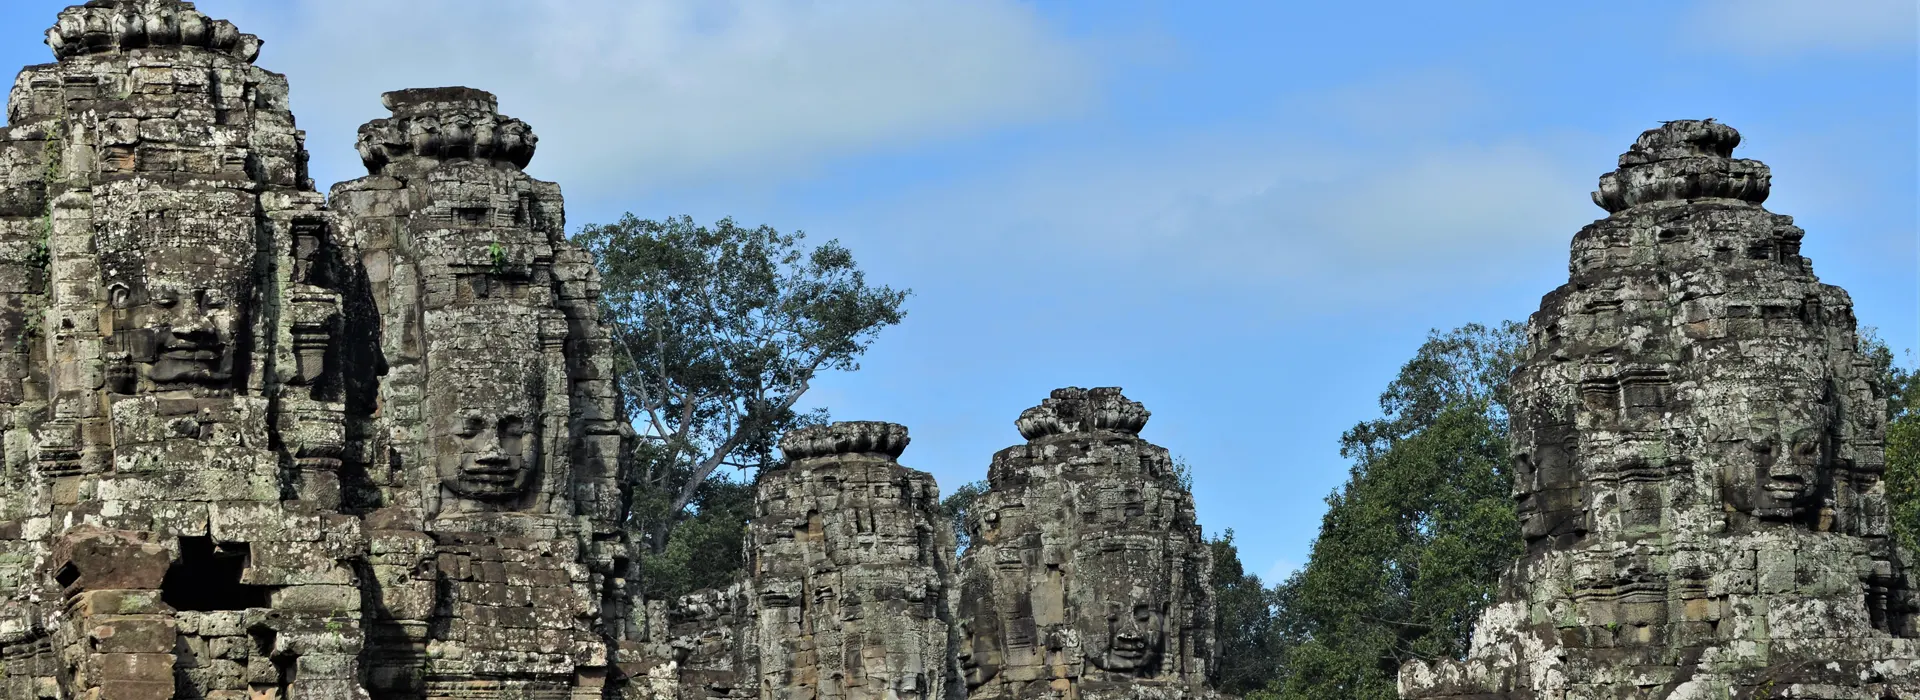 Bayon Temple Section, Cambodia